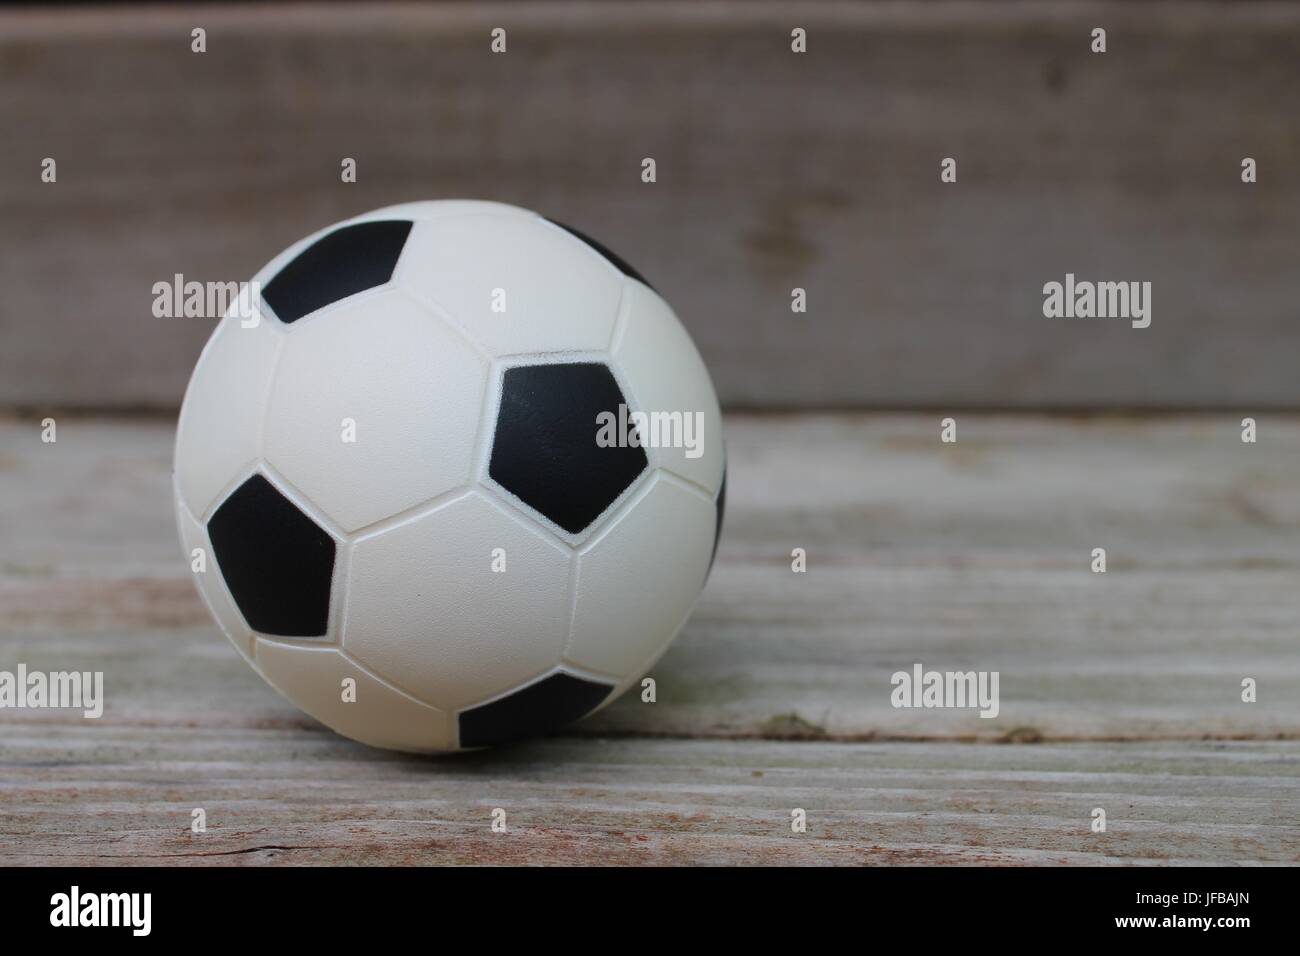 Ballon de soccer libre Banque D'Images